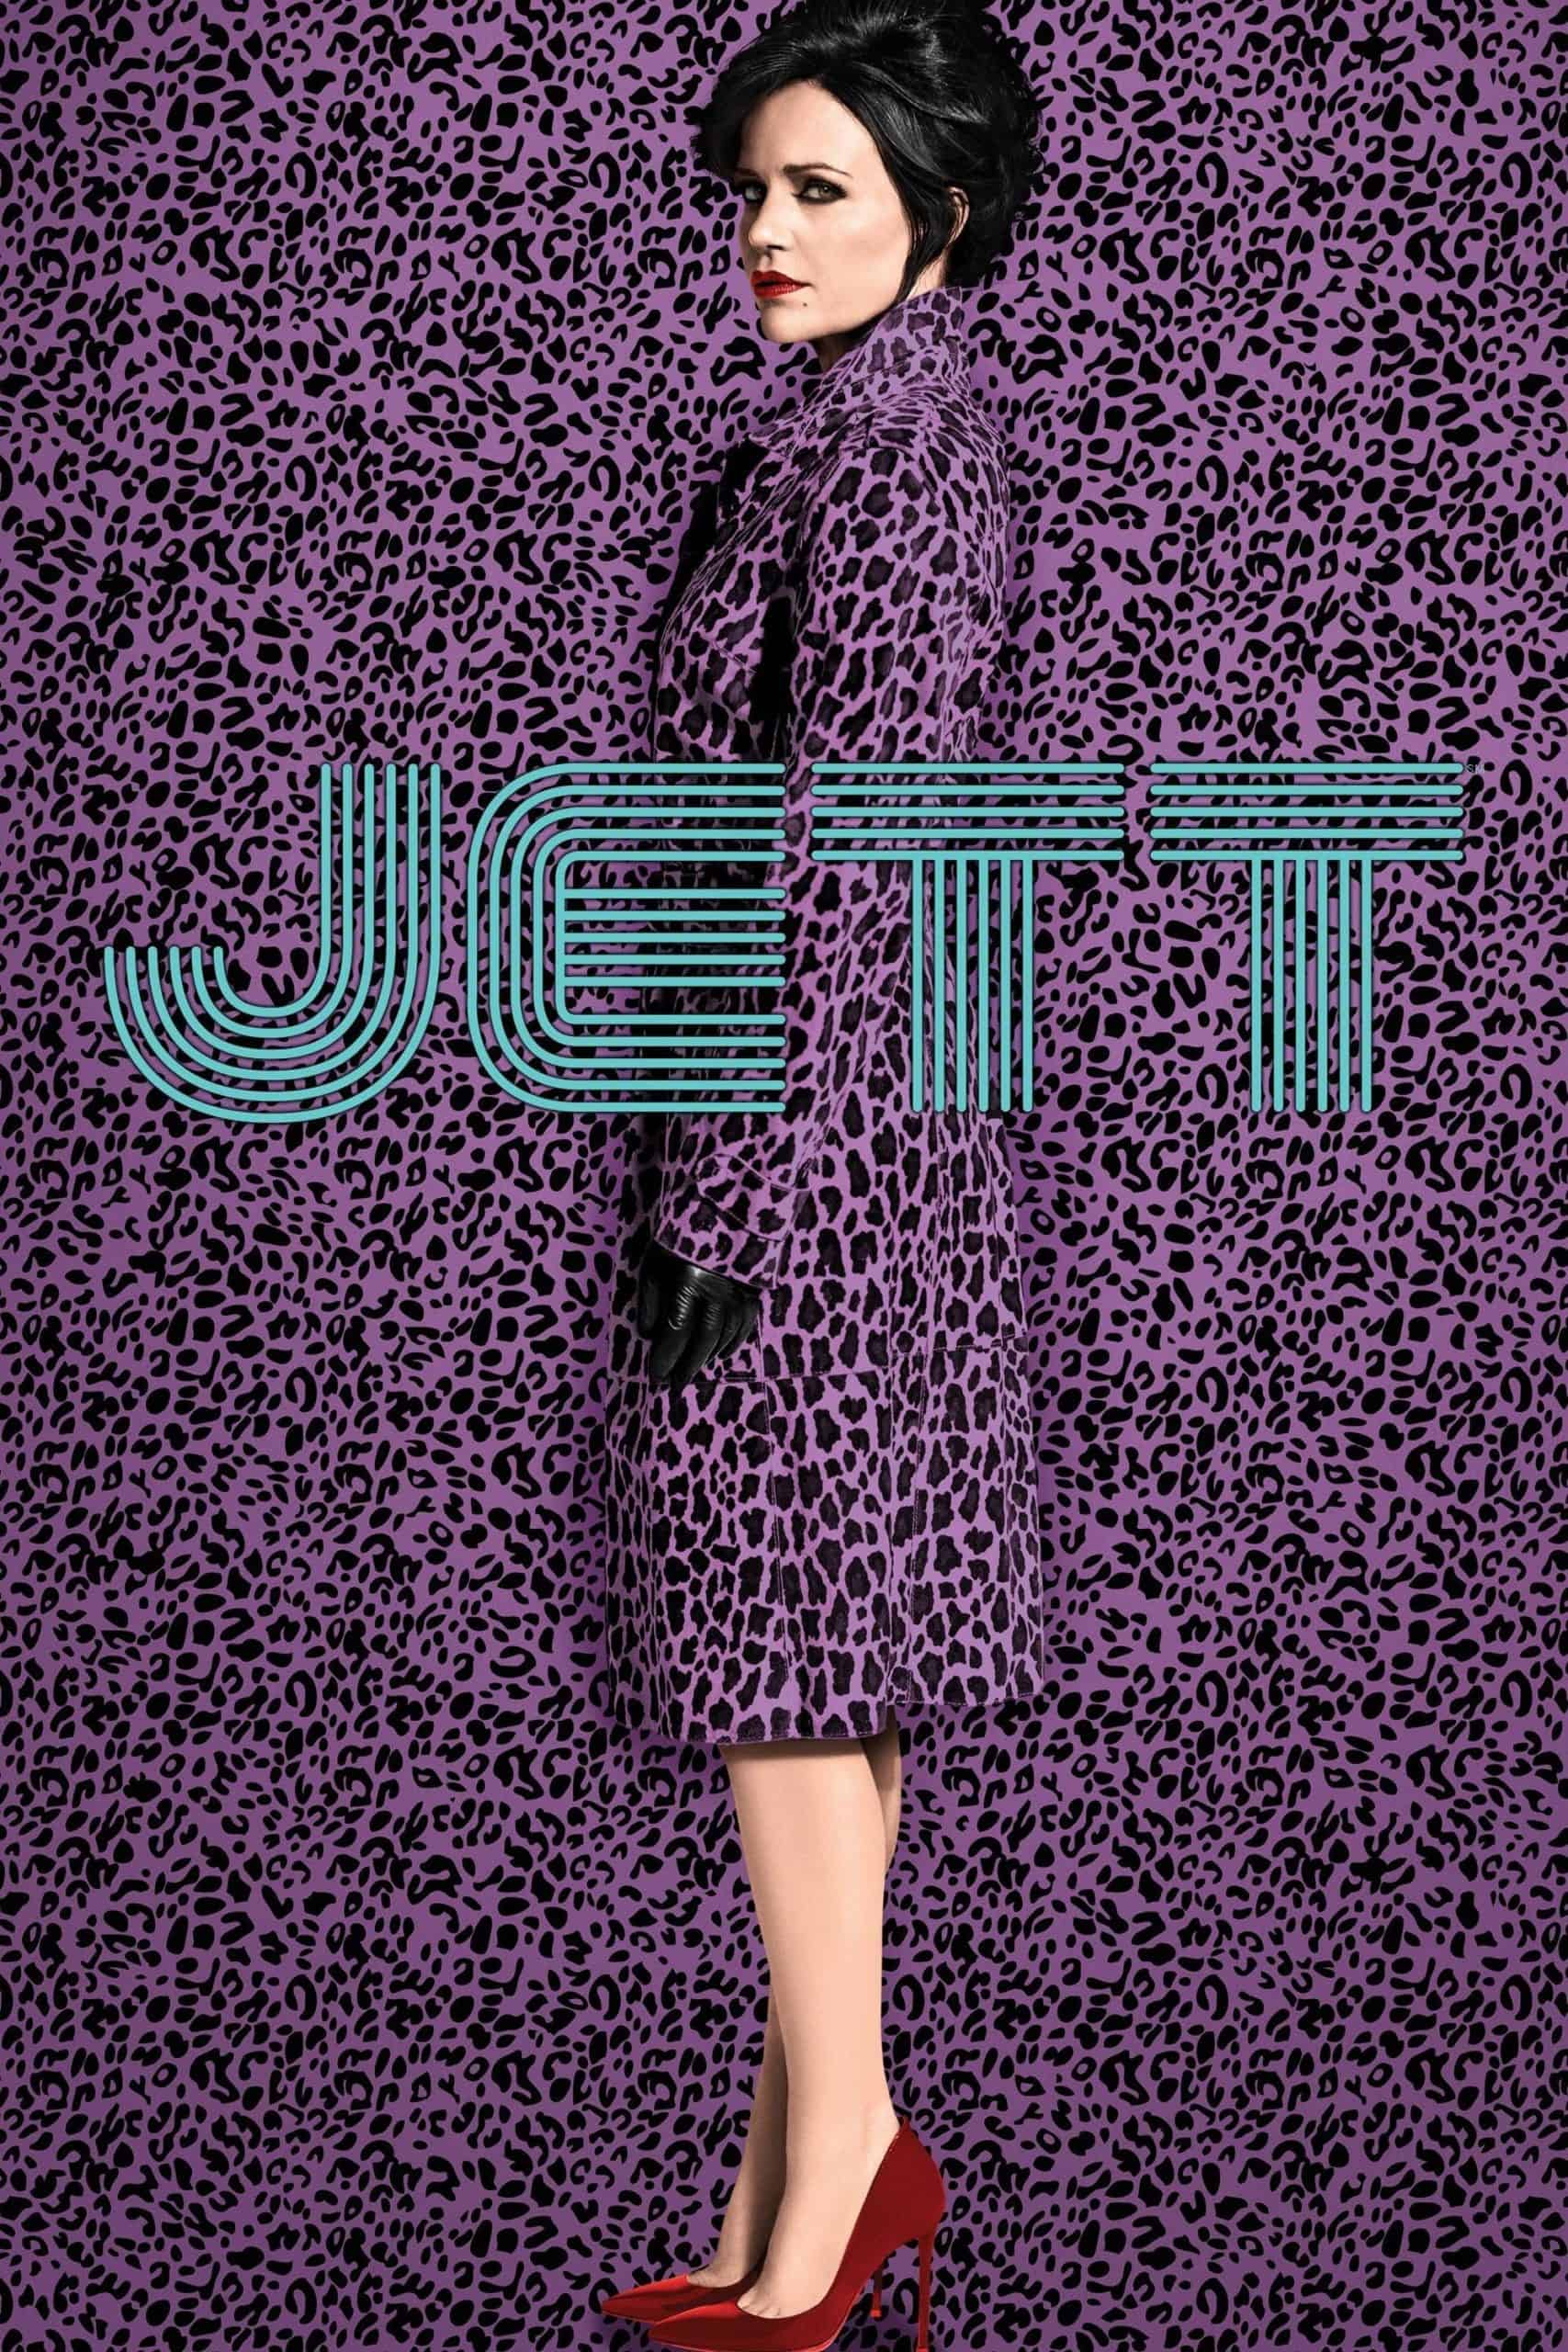 Poster of the series Jett